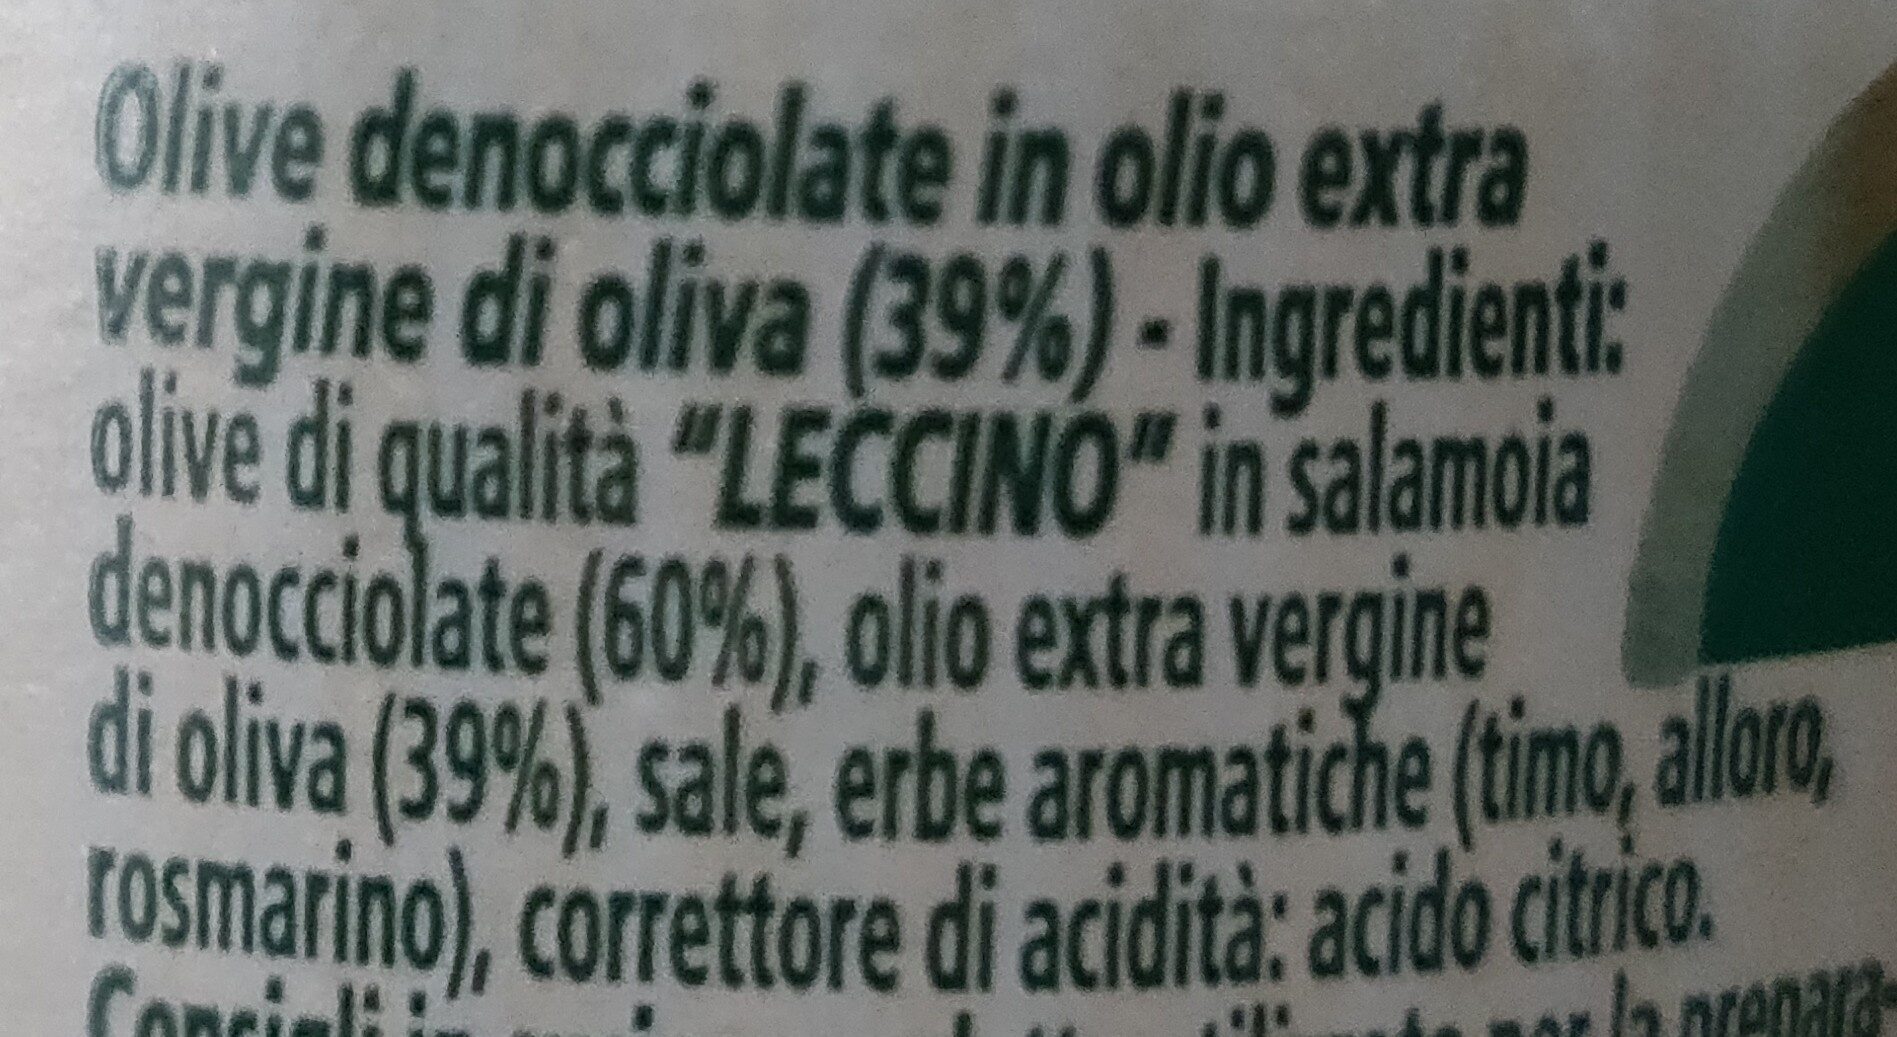 Olive riviera denocciolate - Ingredients - it